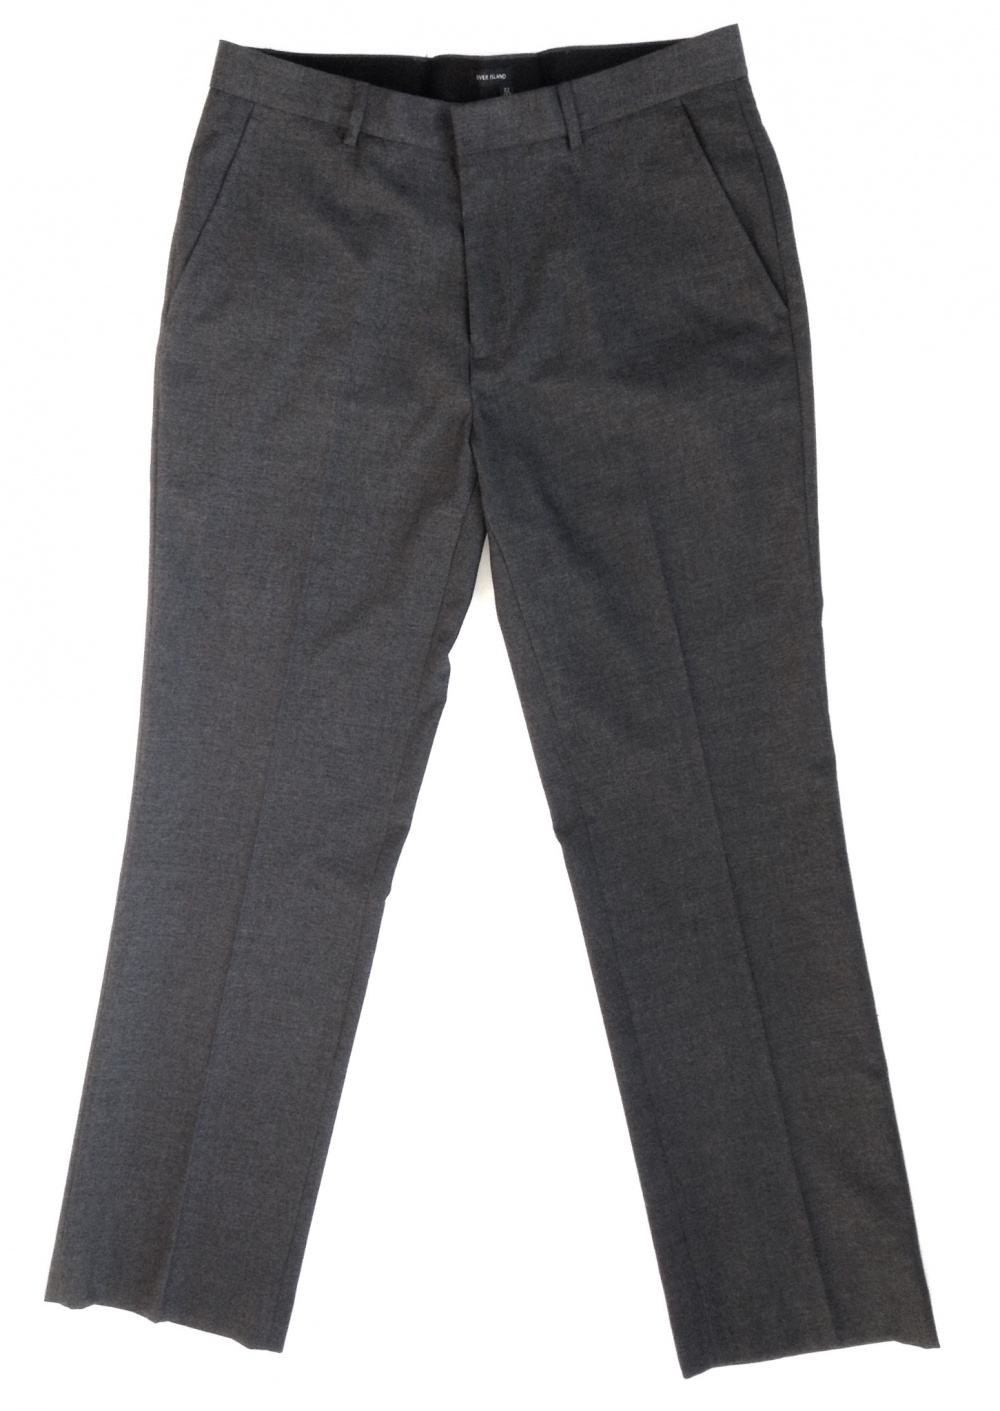 Классические мужские брюки, темно-серого цвета, на 46 (UK 32R EUR 81R) р., River Island, б/у 1раз